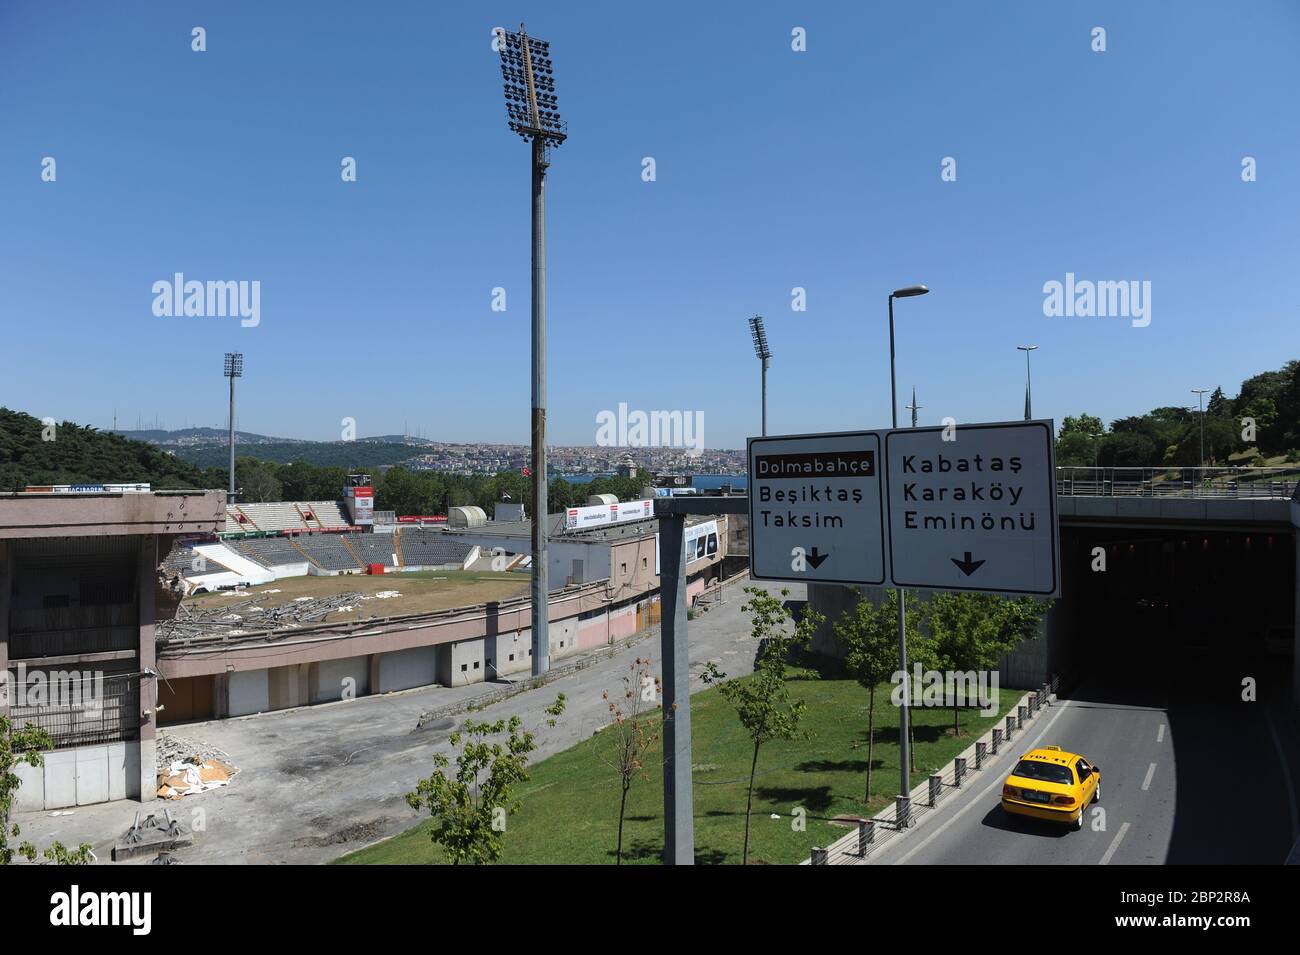 Inonu Stadium, home of Besiktas is demolished in Istanbul, Turkey. Stock Photo